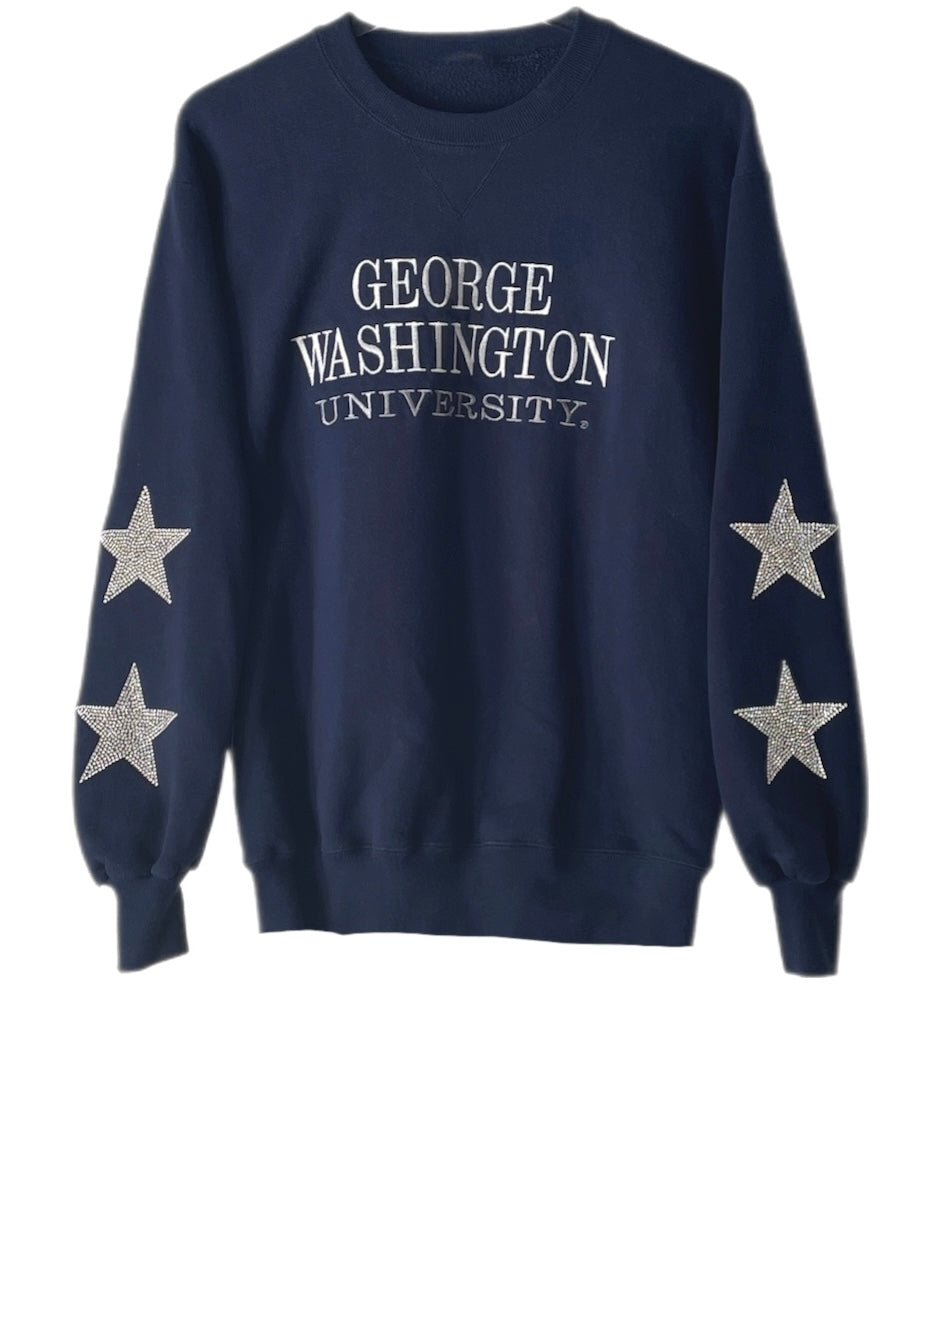 George Washington University, One of a KIND Sweatshirt with Crystal Star Design